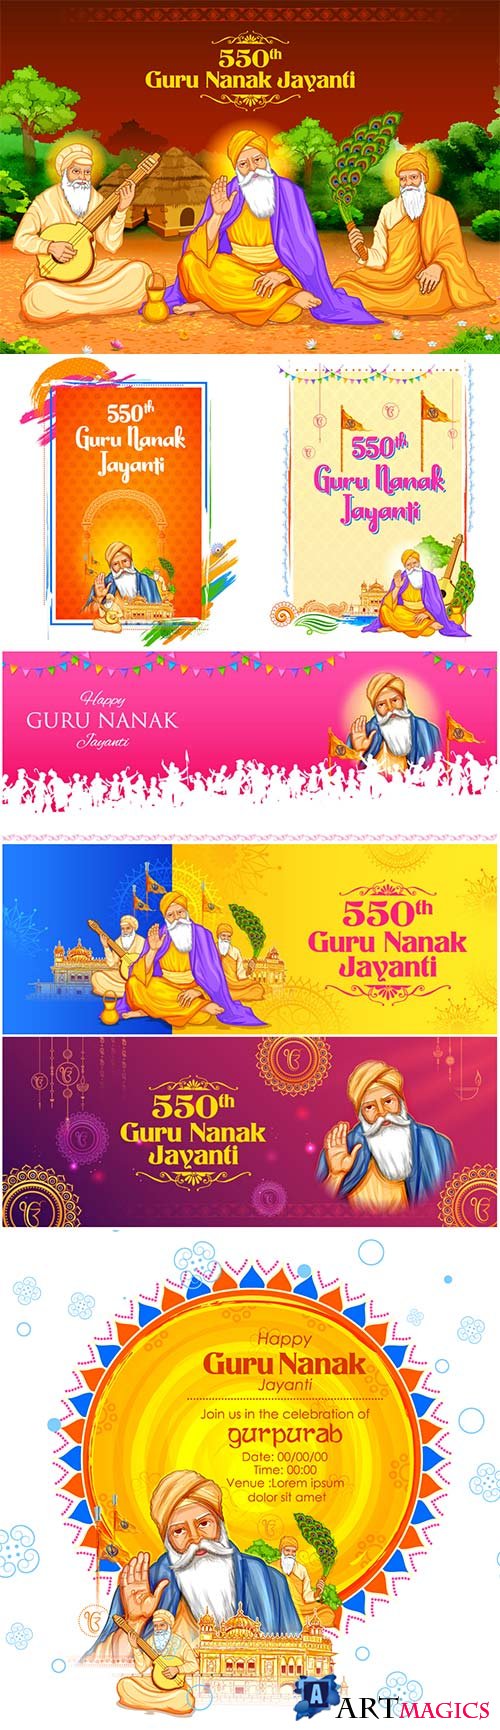 Happy Gurpurab, Guru Nanak Jayanti festival of Sikh celebration 